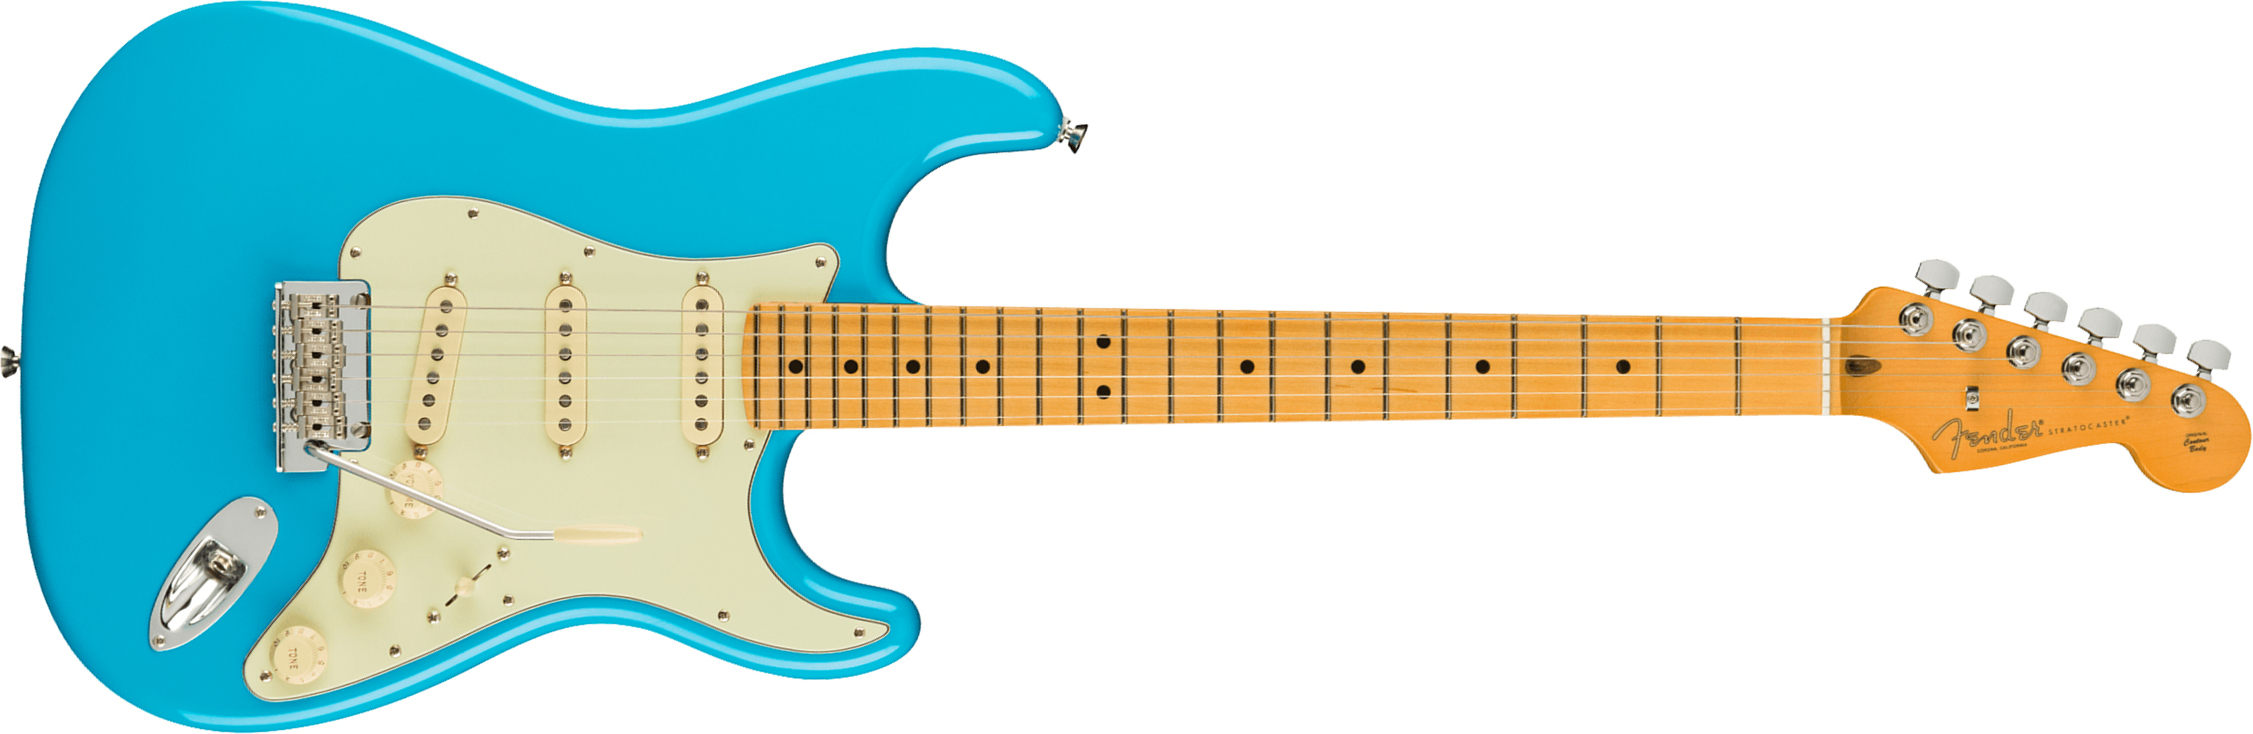 Fender Strat American Professional Ii Usa Mn - Miami Blue - Str shape electric guitar - Main picture